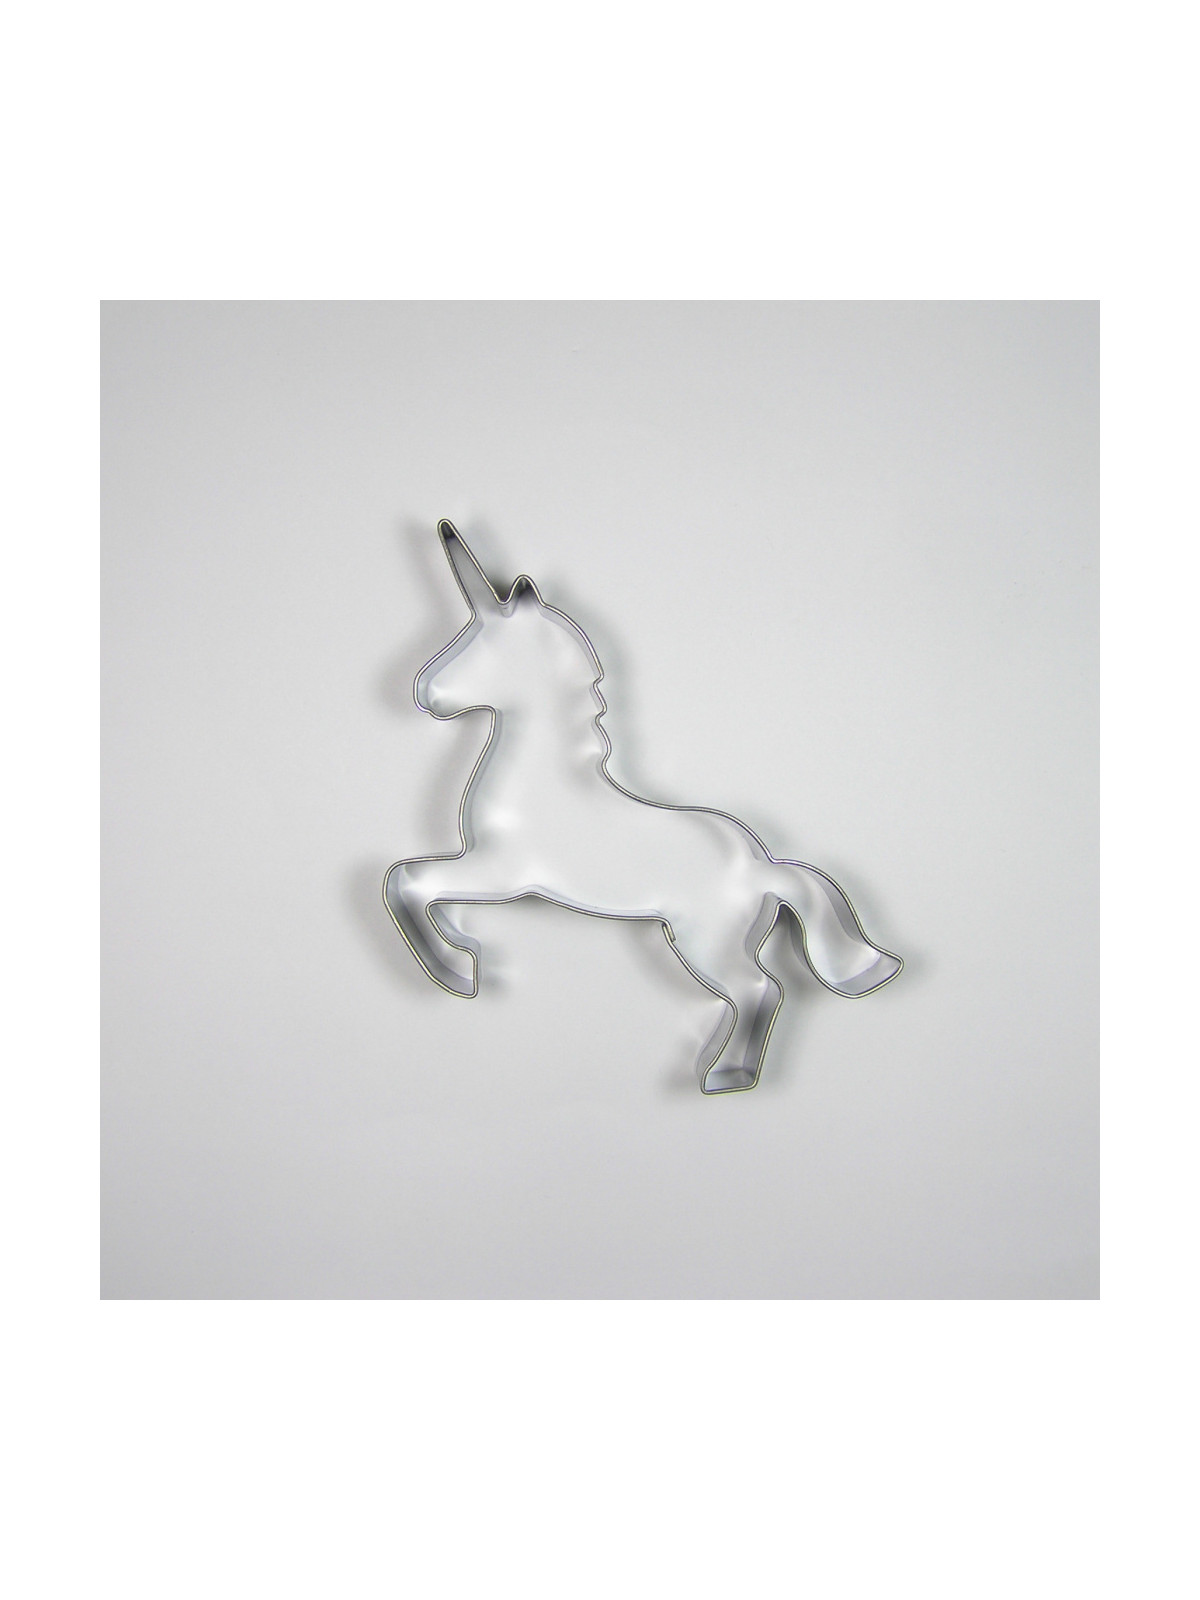 Stainless steel cutter - unicorn 9.7cm